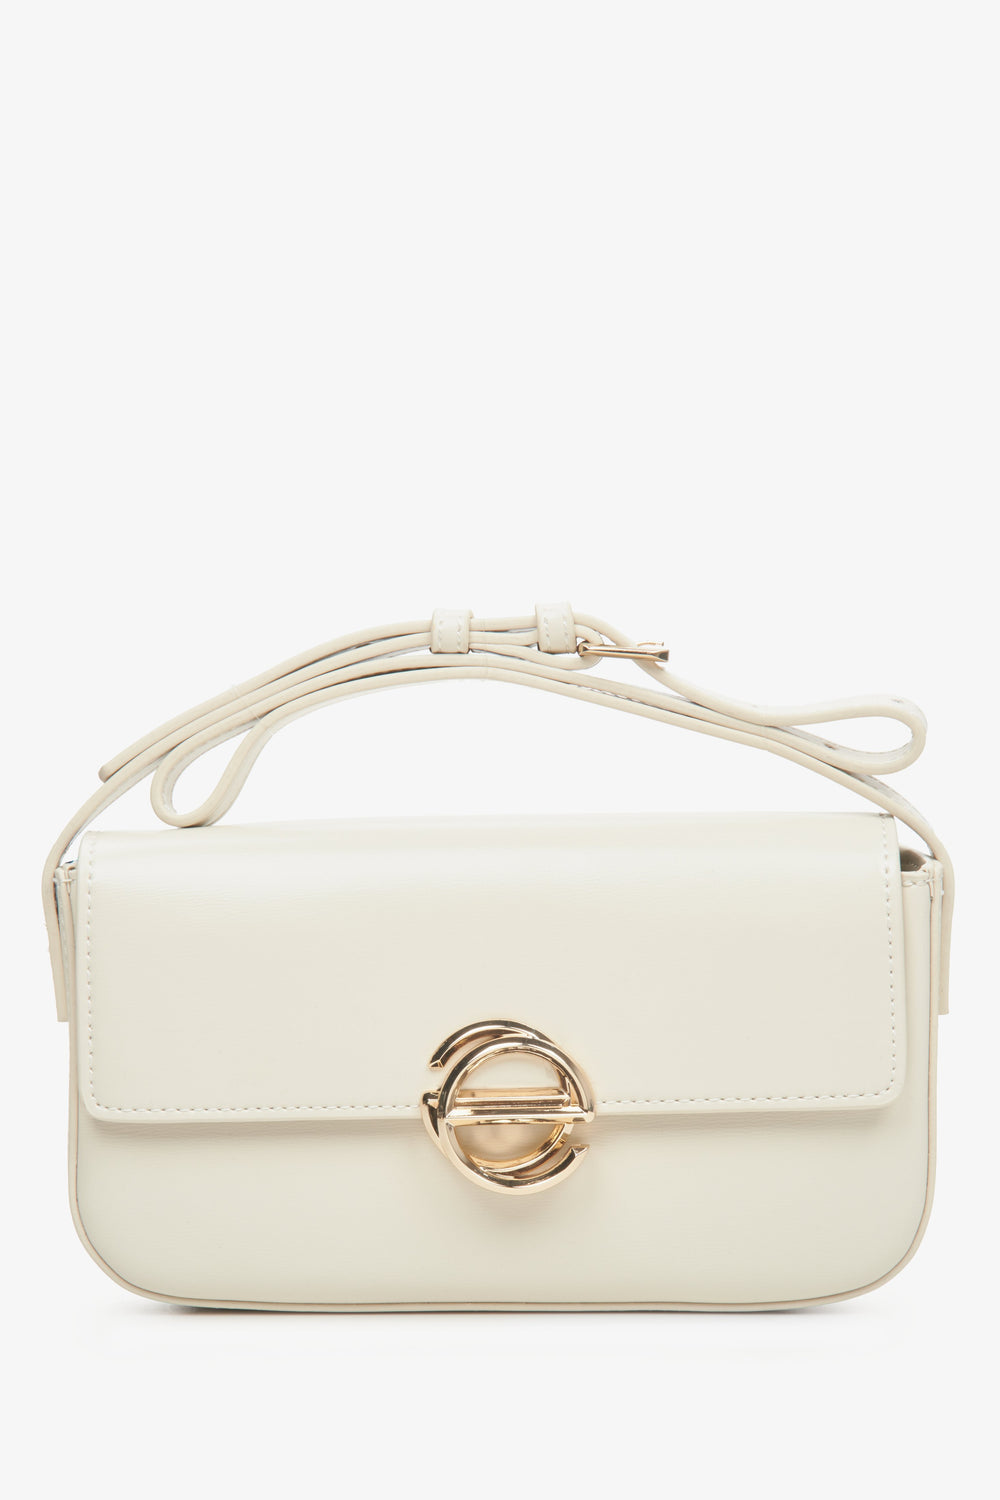 Women's Small Light Beige Handbag made of Genuine Leather with Golden Hardware Estro ER00113755.